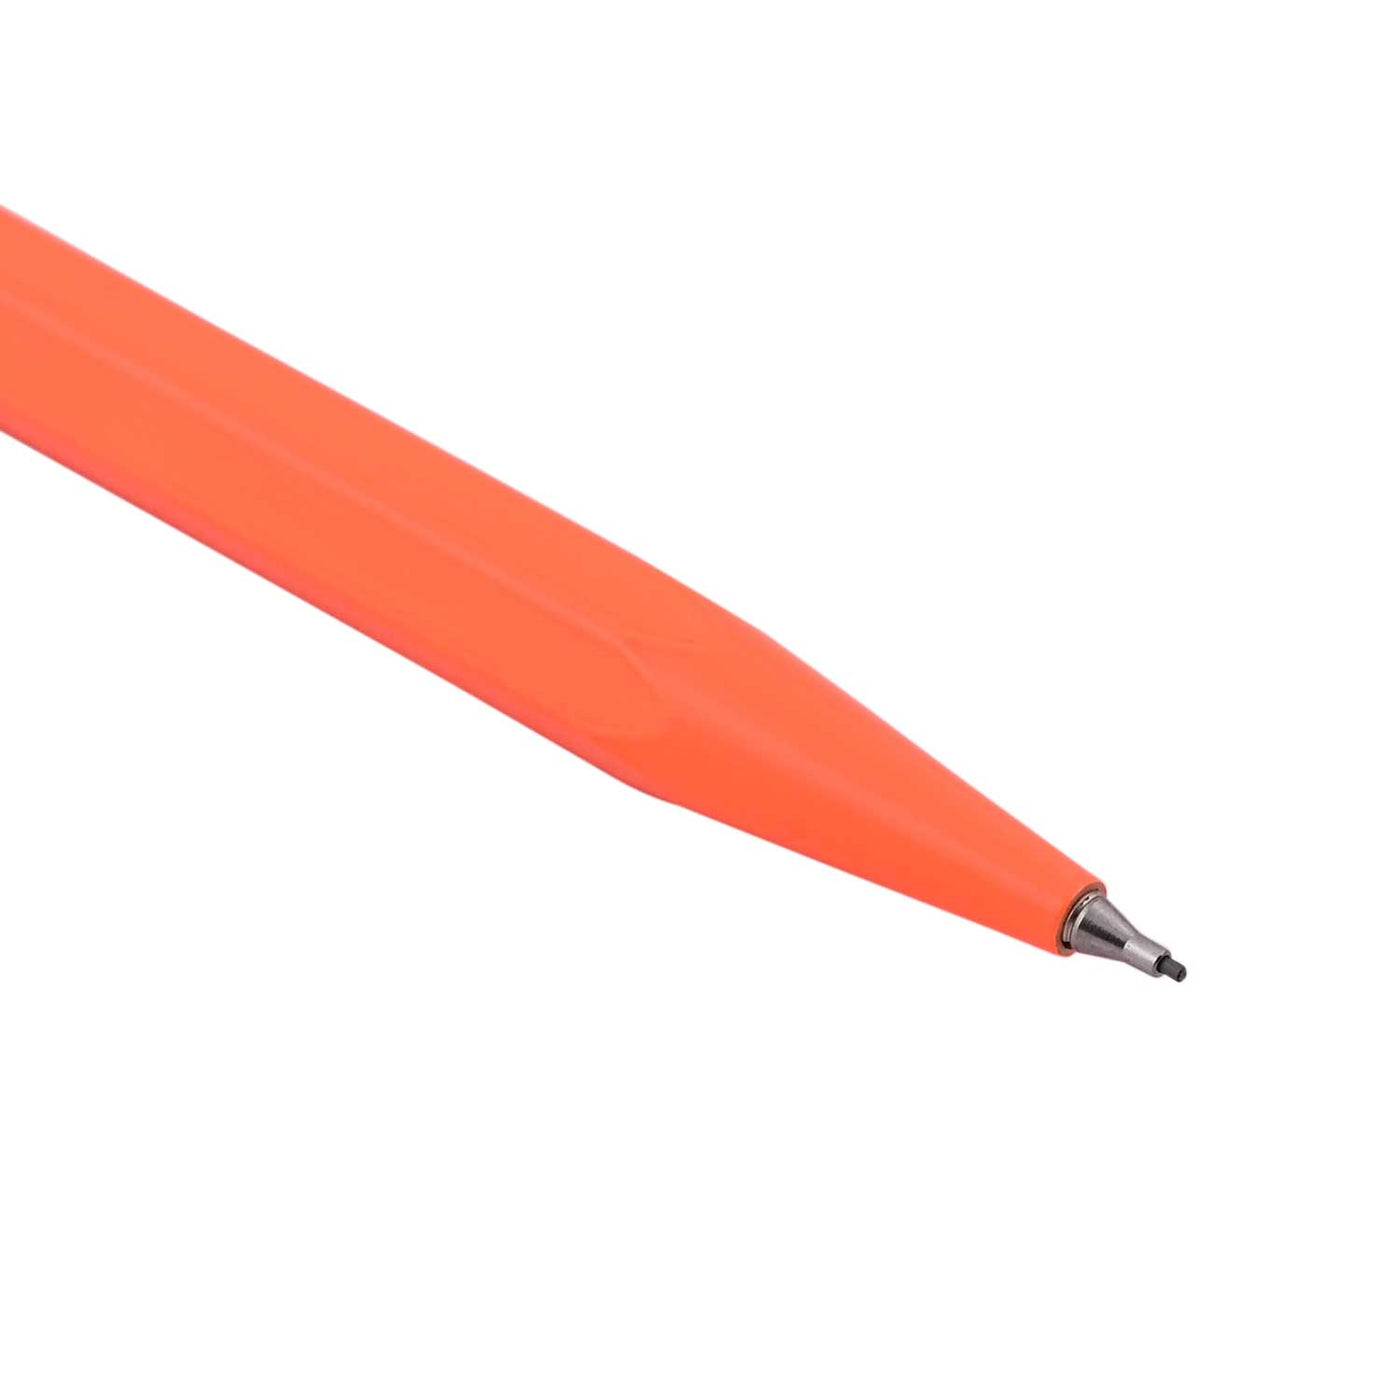 Caran d'Ache 849 Fluo 0.7mm Mechanical Pencil - Orange 2